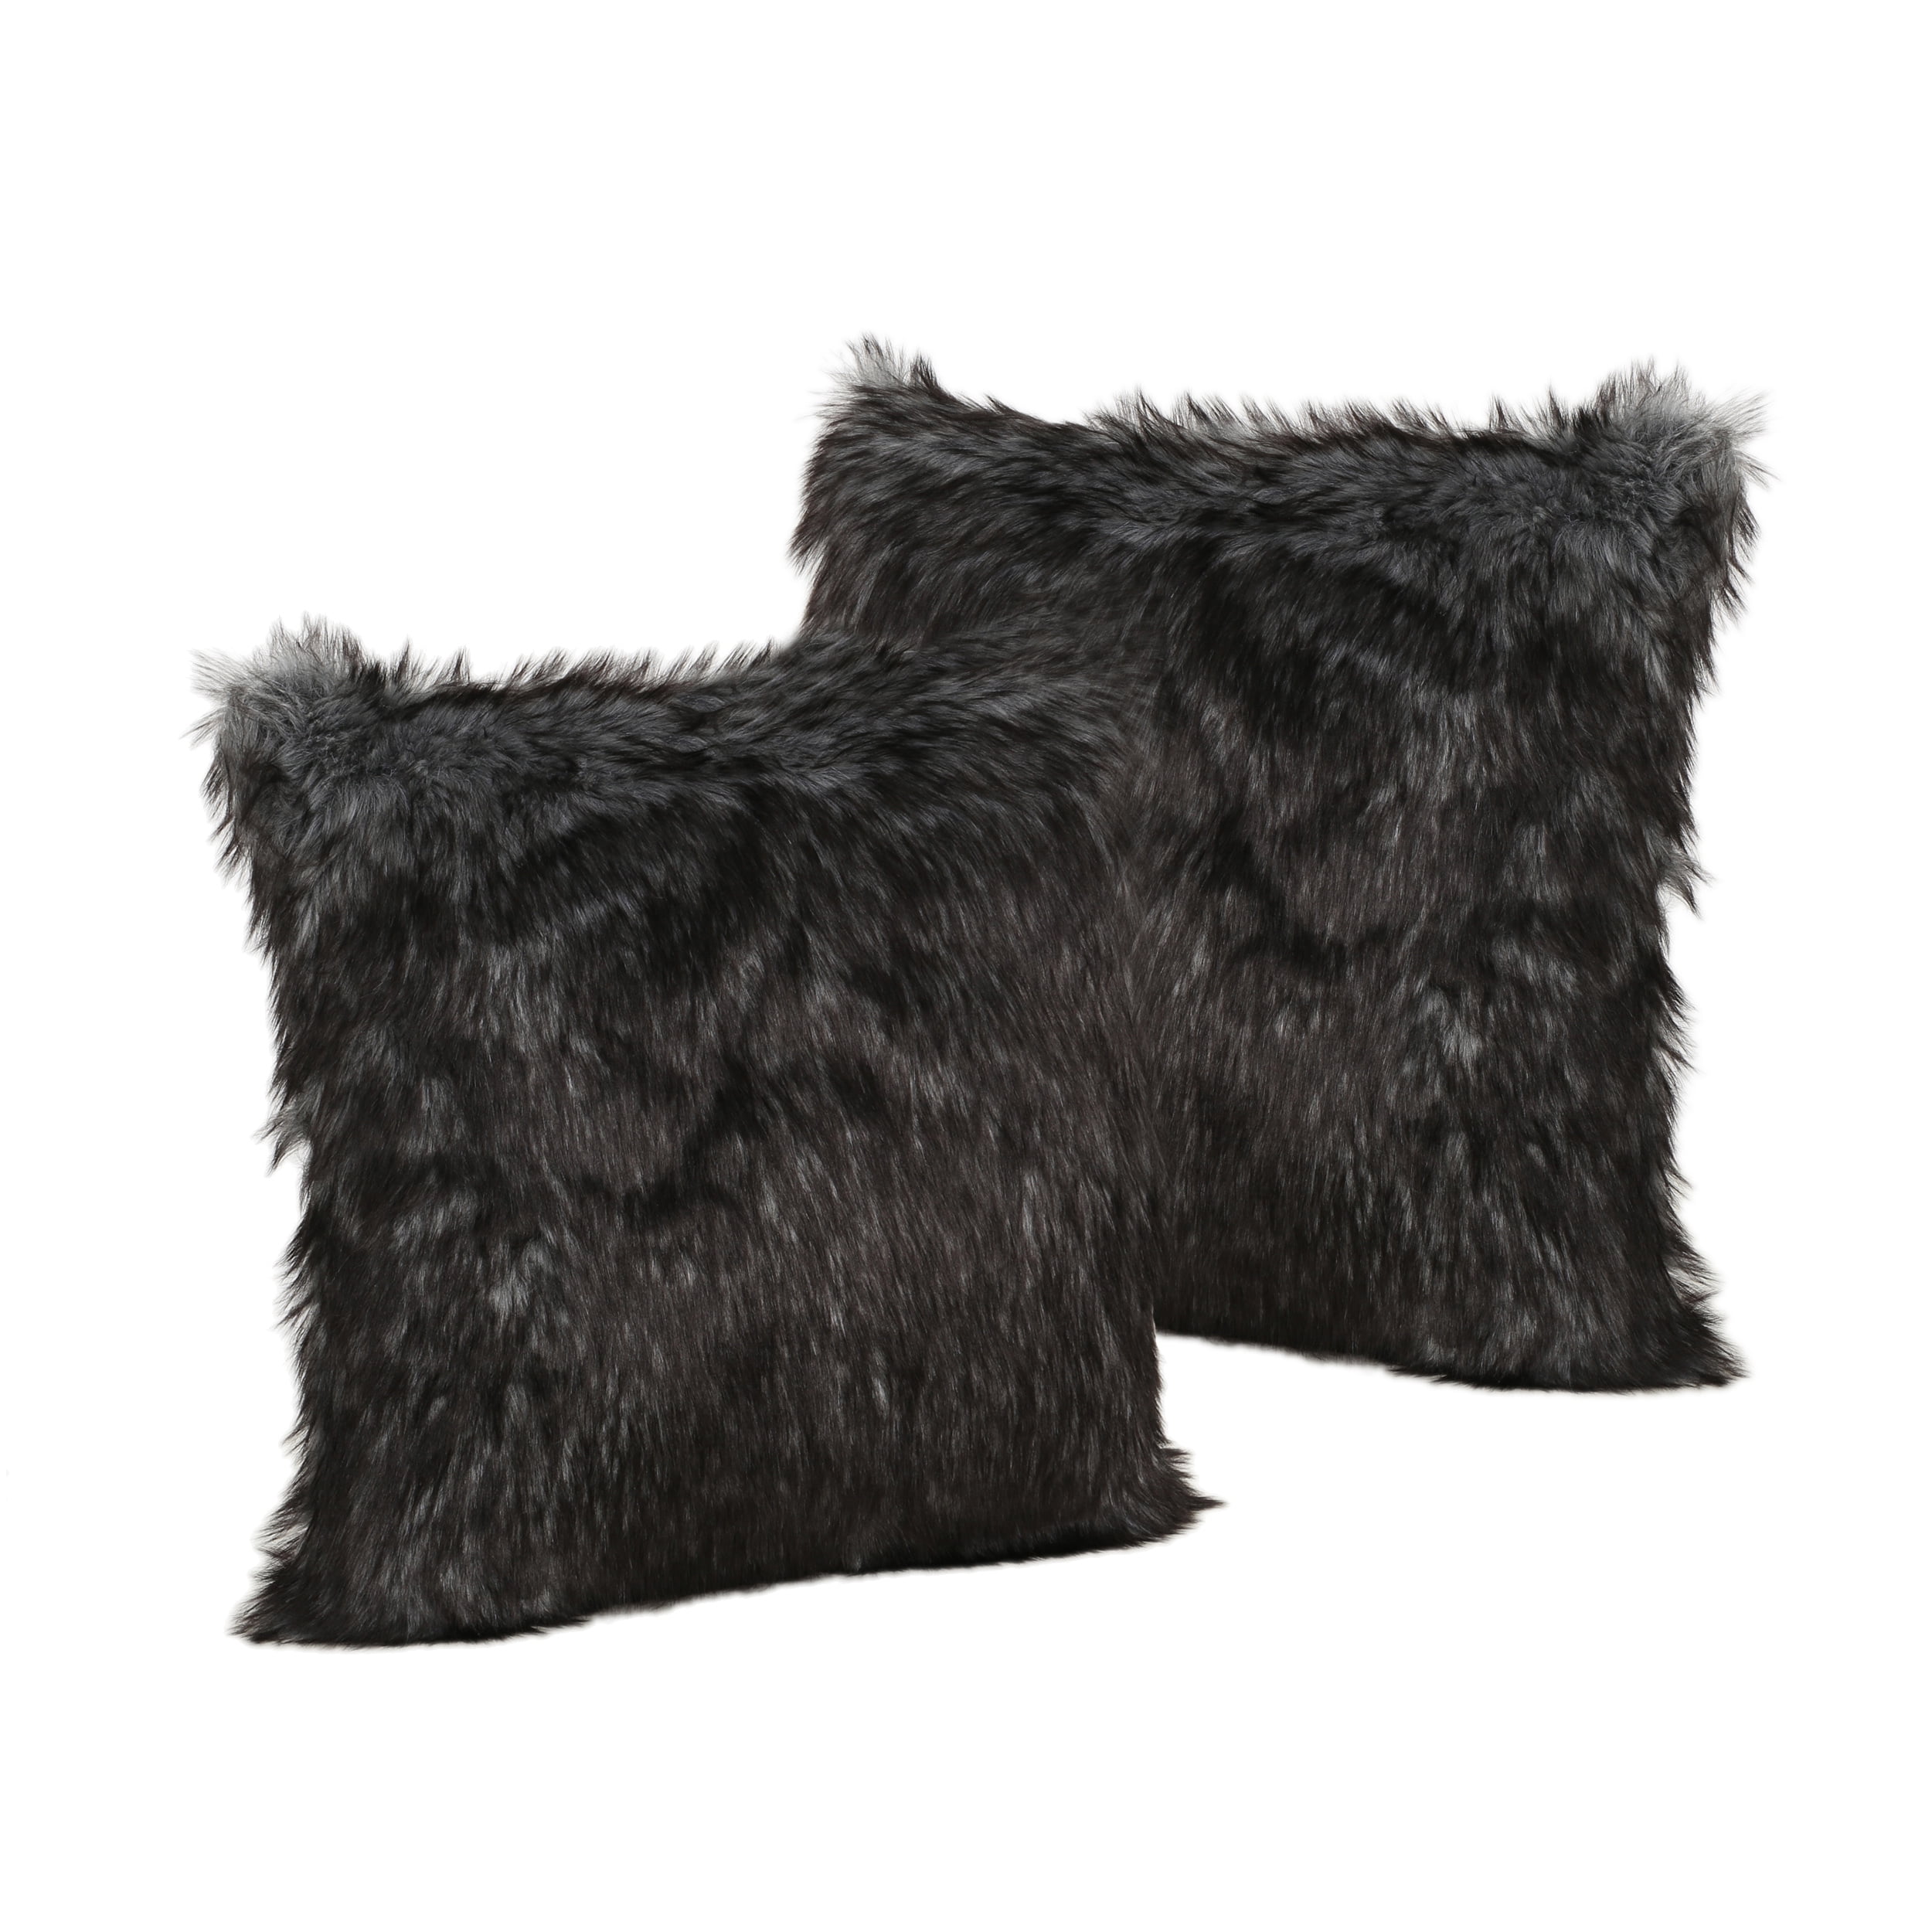 Laraine Glam Faux Fur  Throw Pillows  Set of 2 Black and 